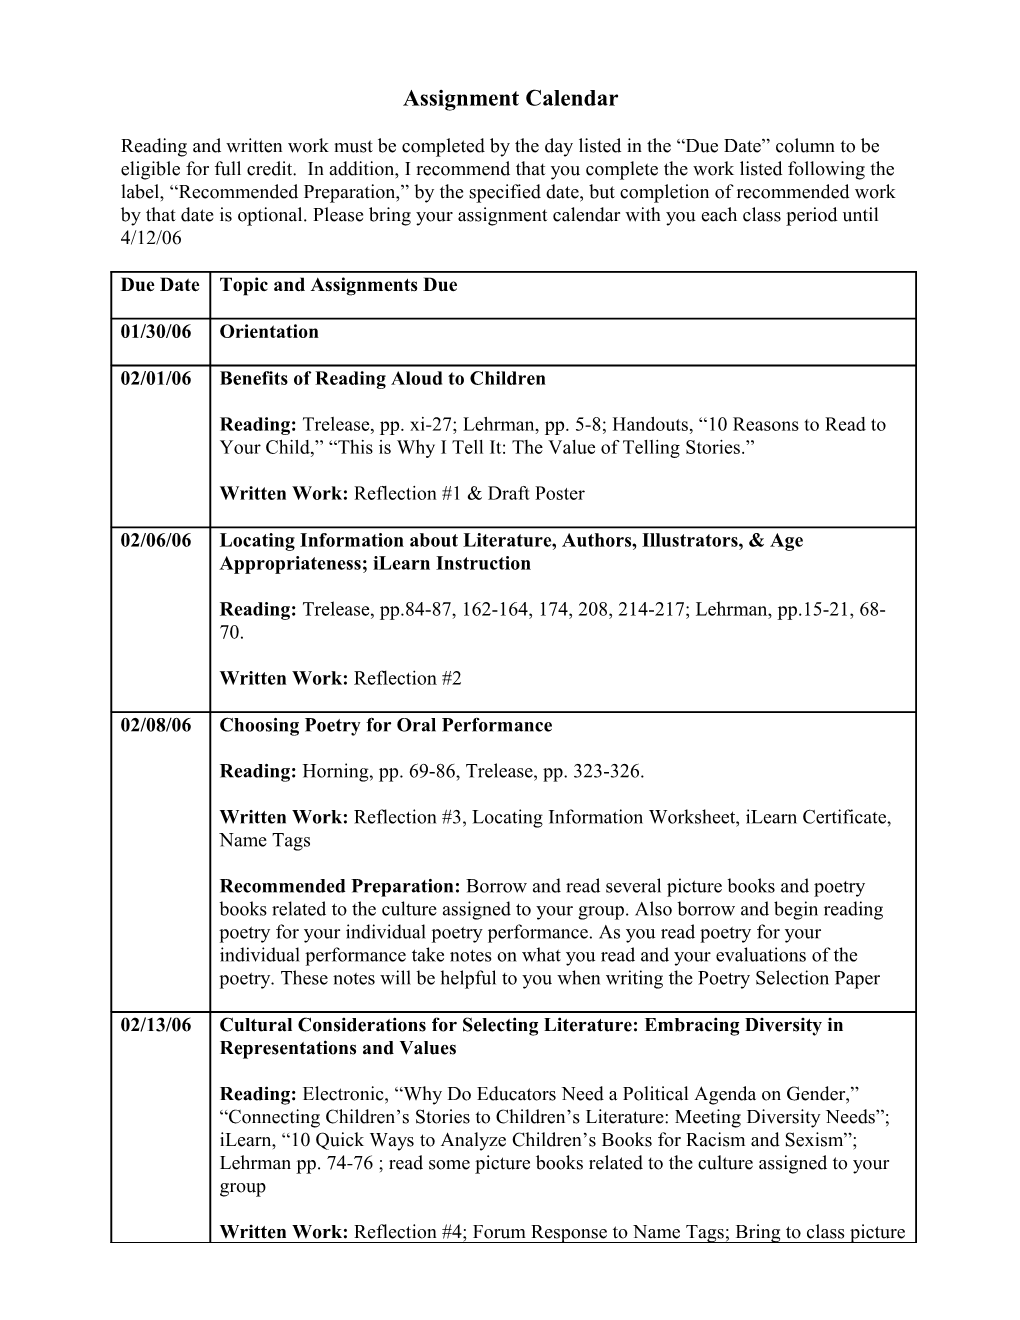 Assignment Calendar, SPCH 364, Spring 2006.Page 1